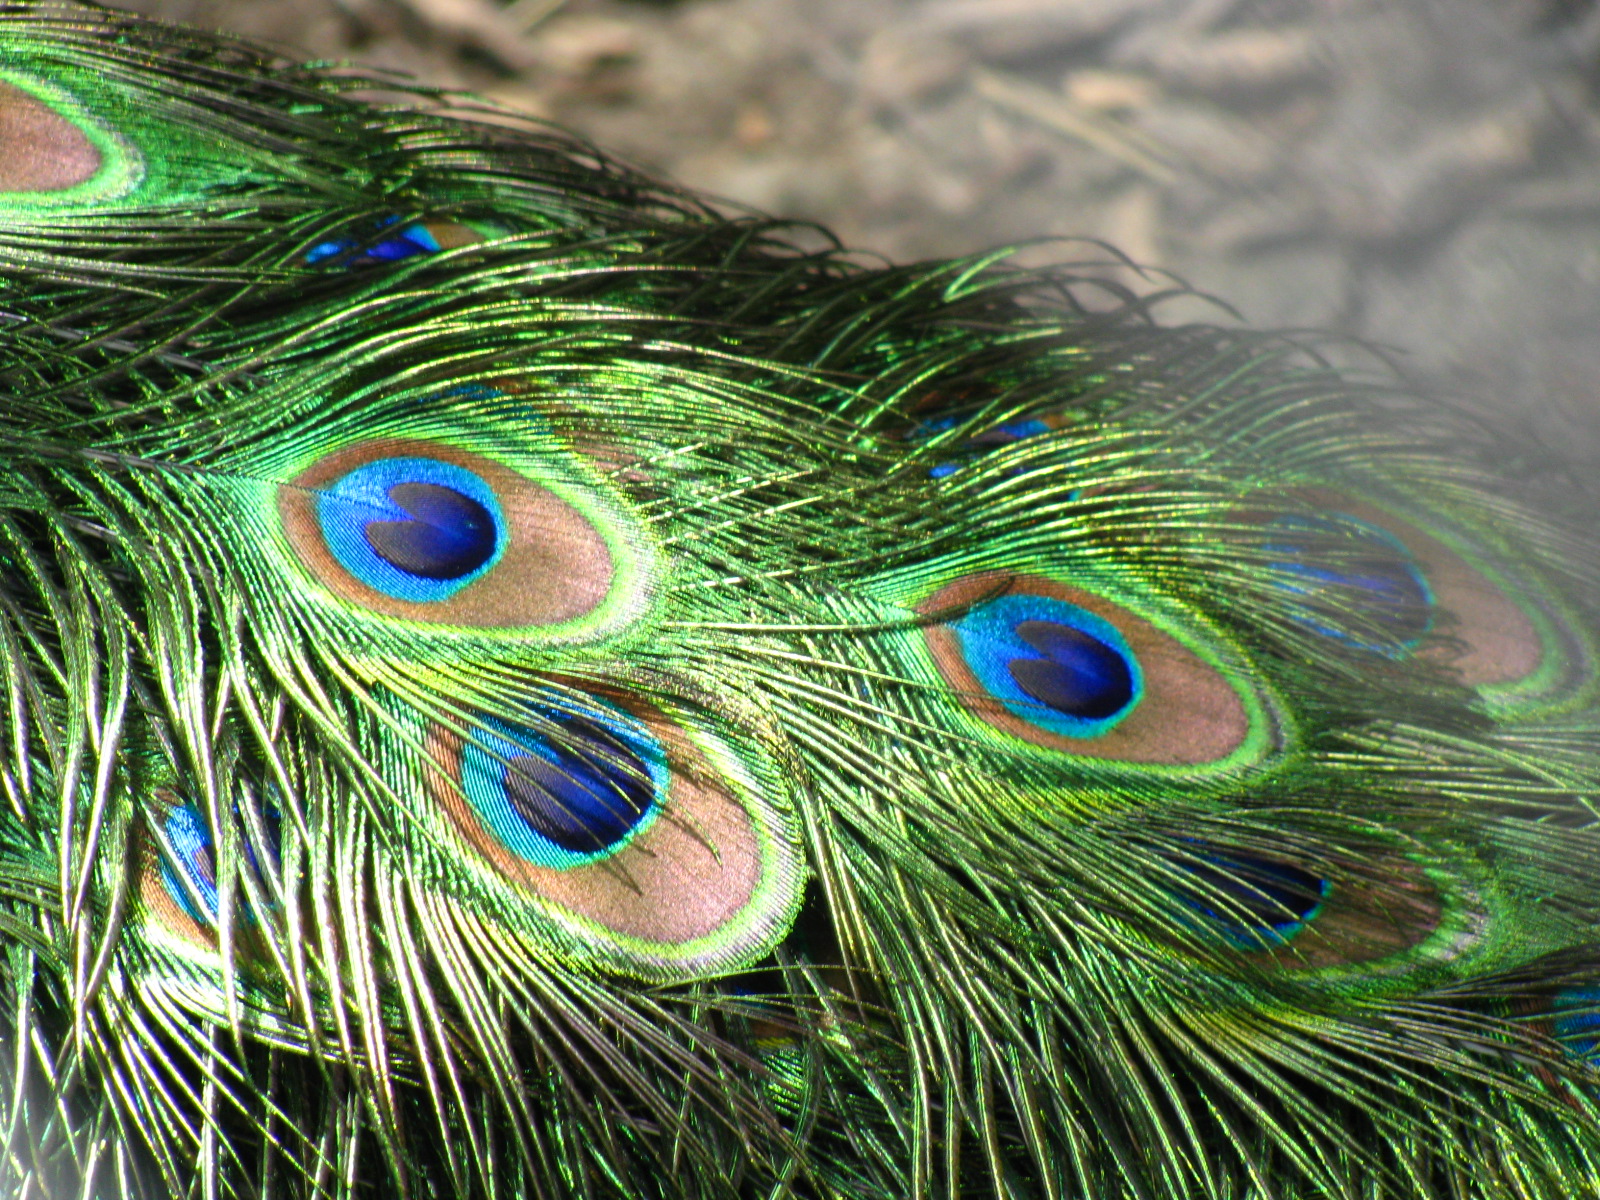 Peacock_feathers_closeup